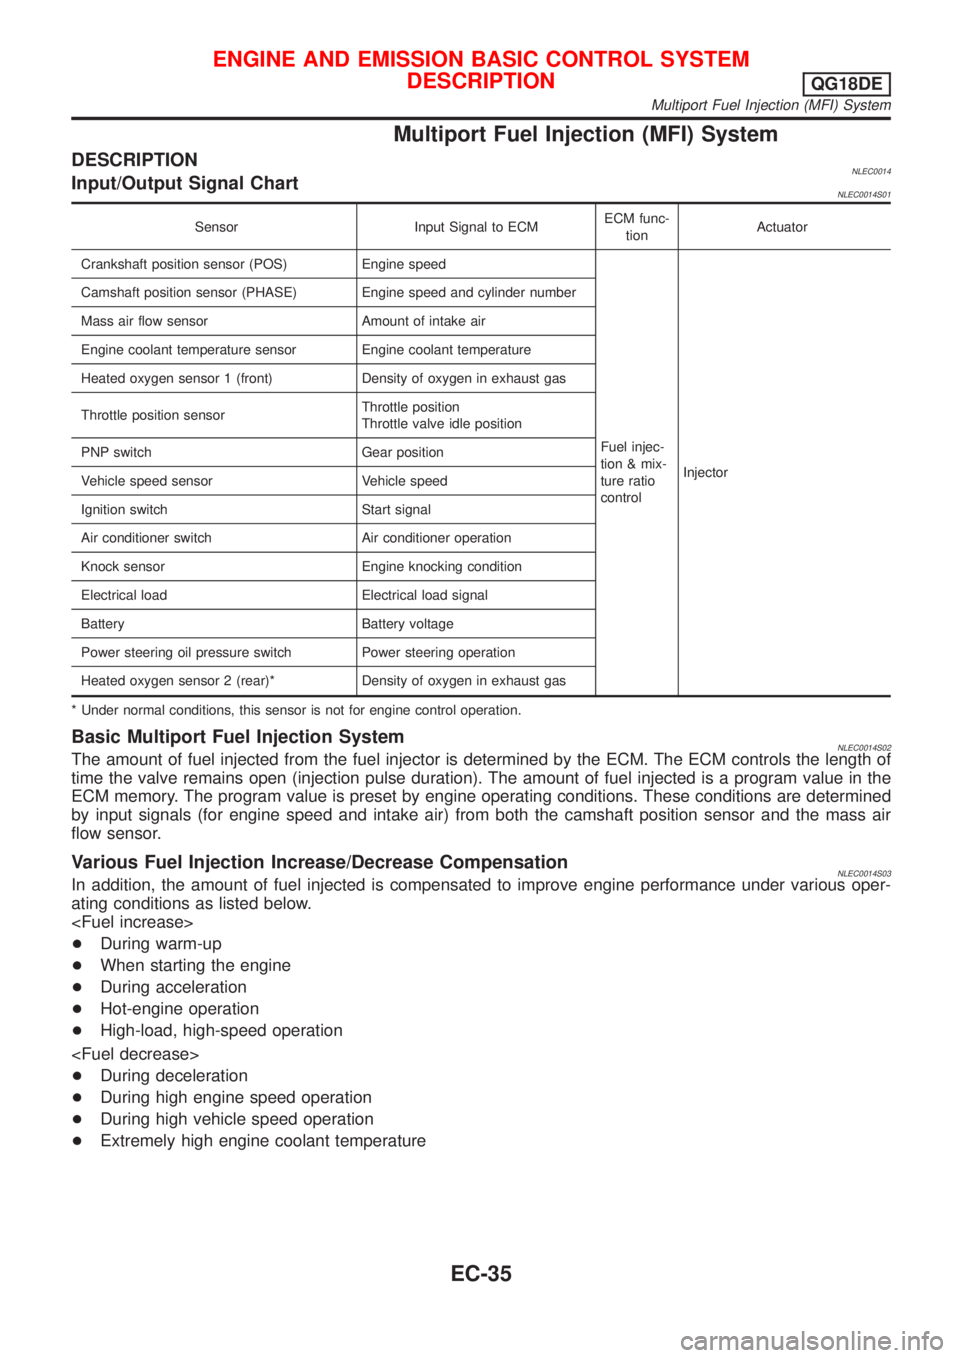 NISSAN ALMERA TINO 2001  Service Repair Manual Multiport Fuel Injection (MFI) System
DESCRIPTIONNLEC0014Input/Output Signal ChartNLEC0014S01
Sensor Input Signal to ECMECM func-
tionActuator
Crankshaft position sensor (POS) Engine speed
Fuel injec-